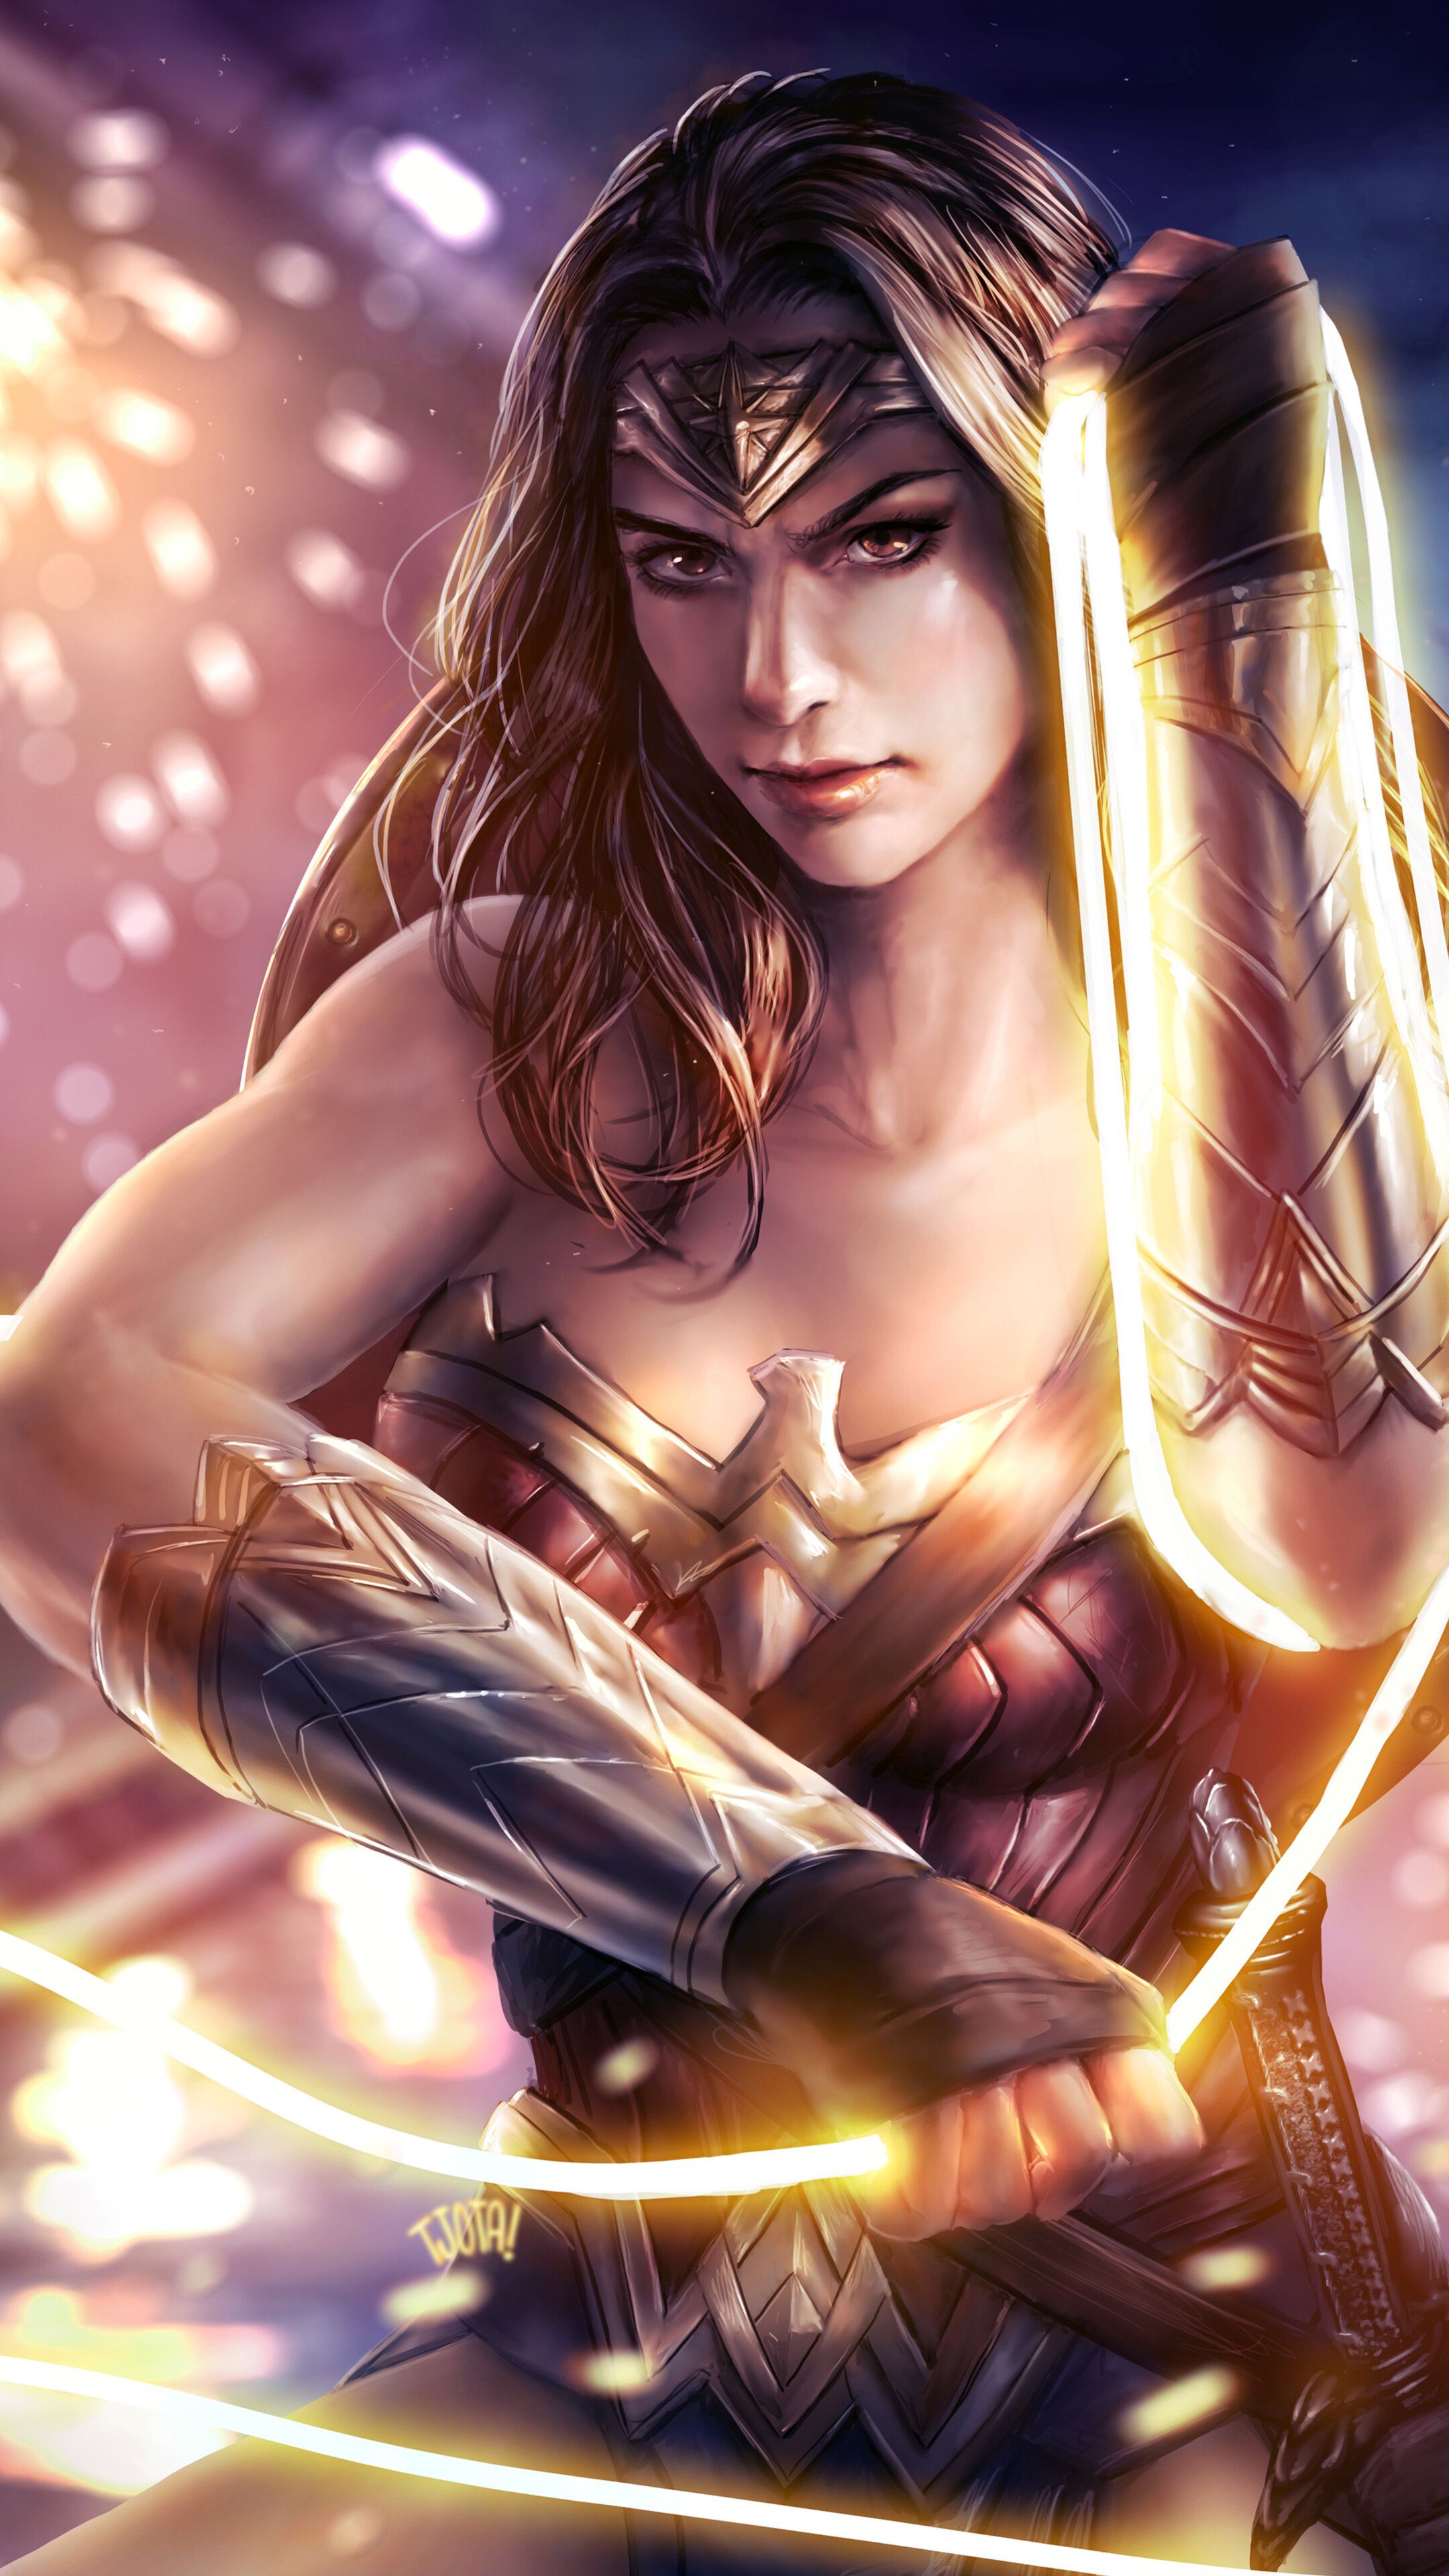 Wonder Woman Art, 4K phone HD Wallpaper, Image, Background, Photo and Picture. Mocah HD Wallpaper